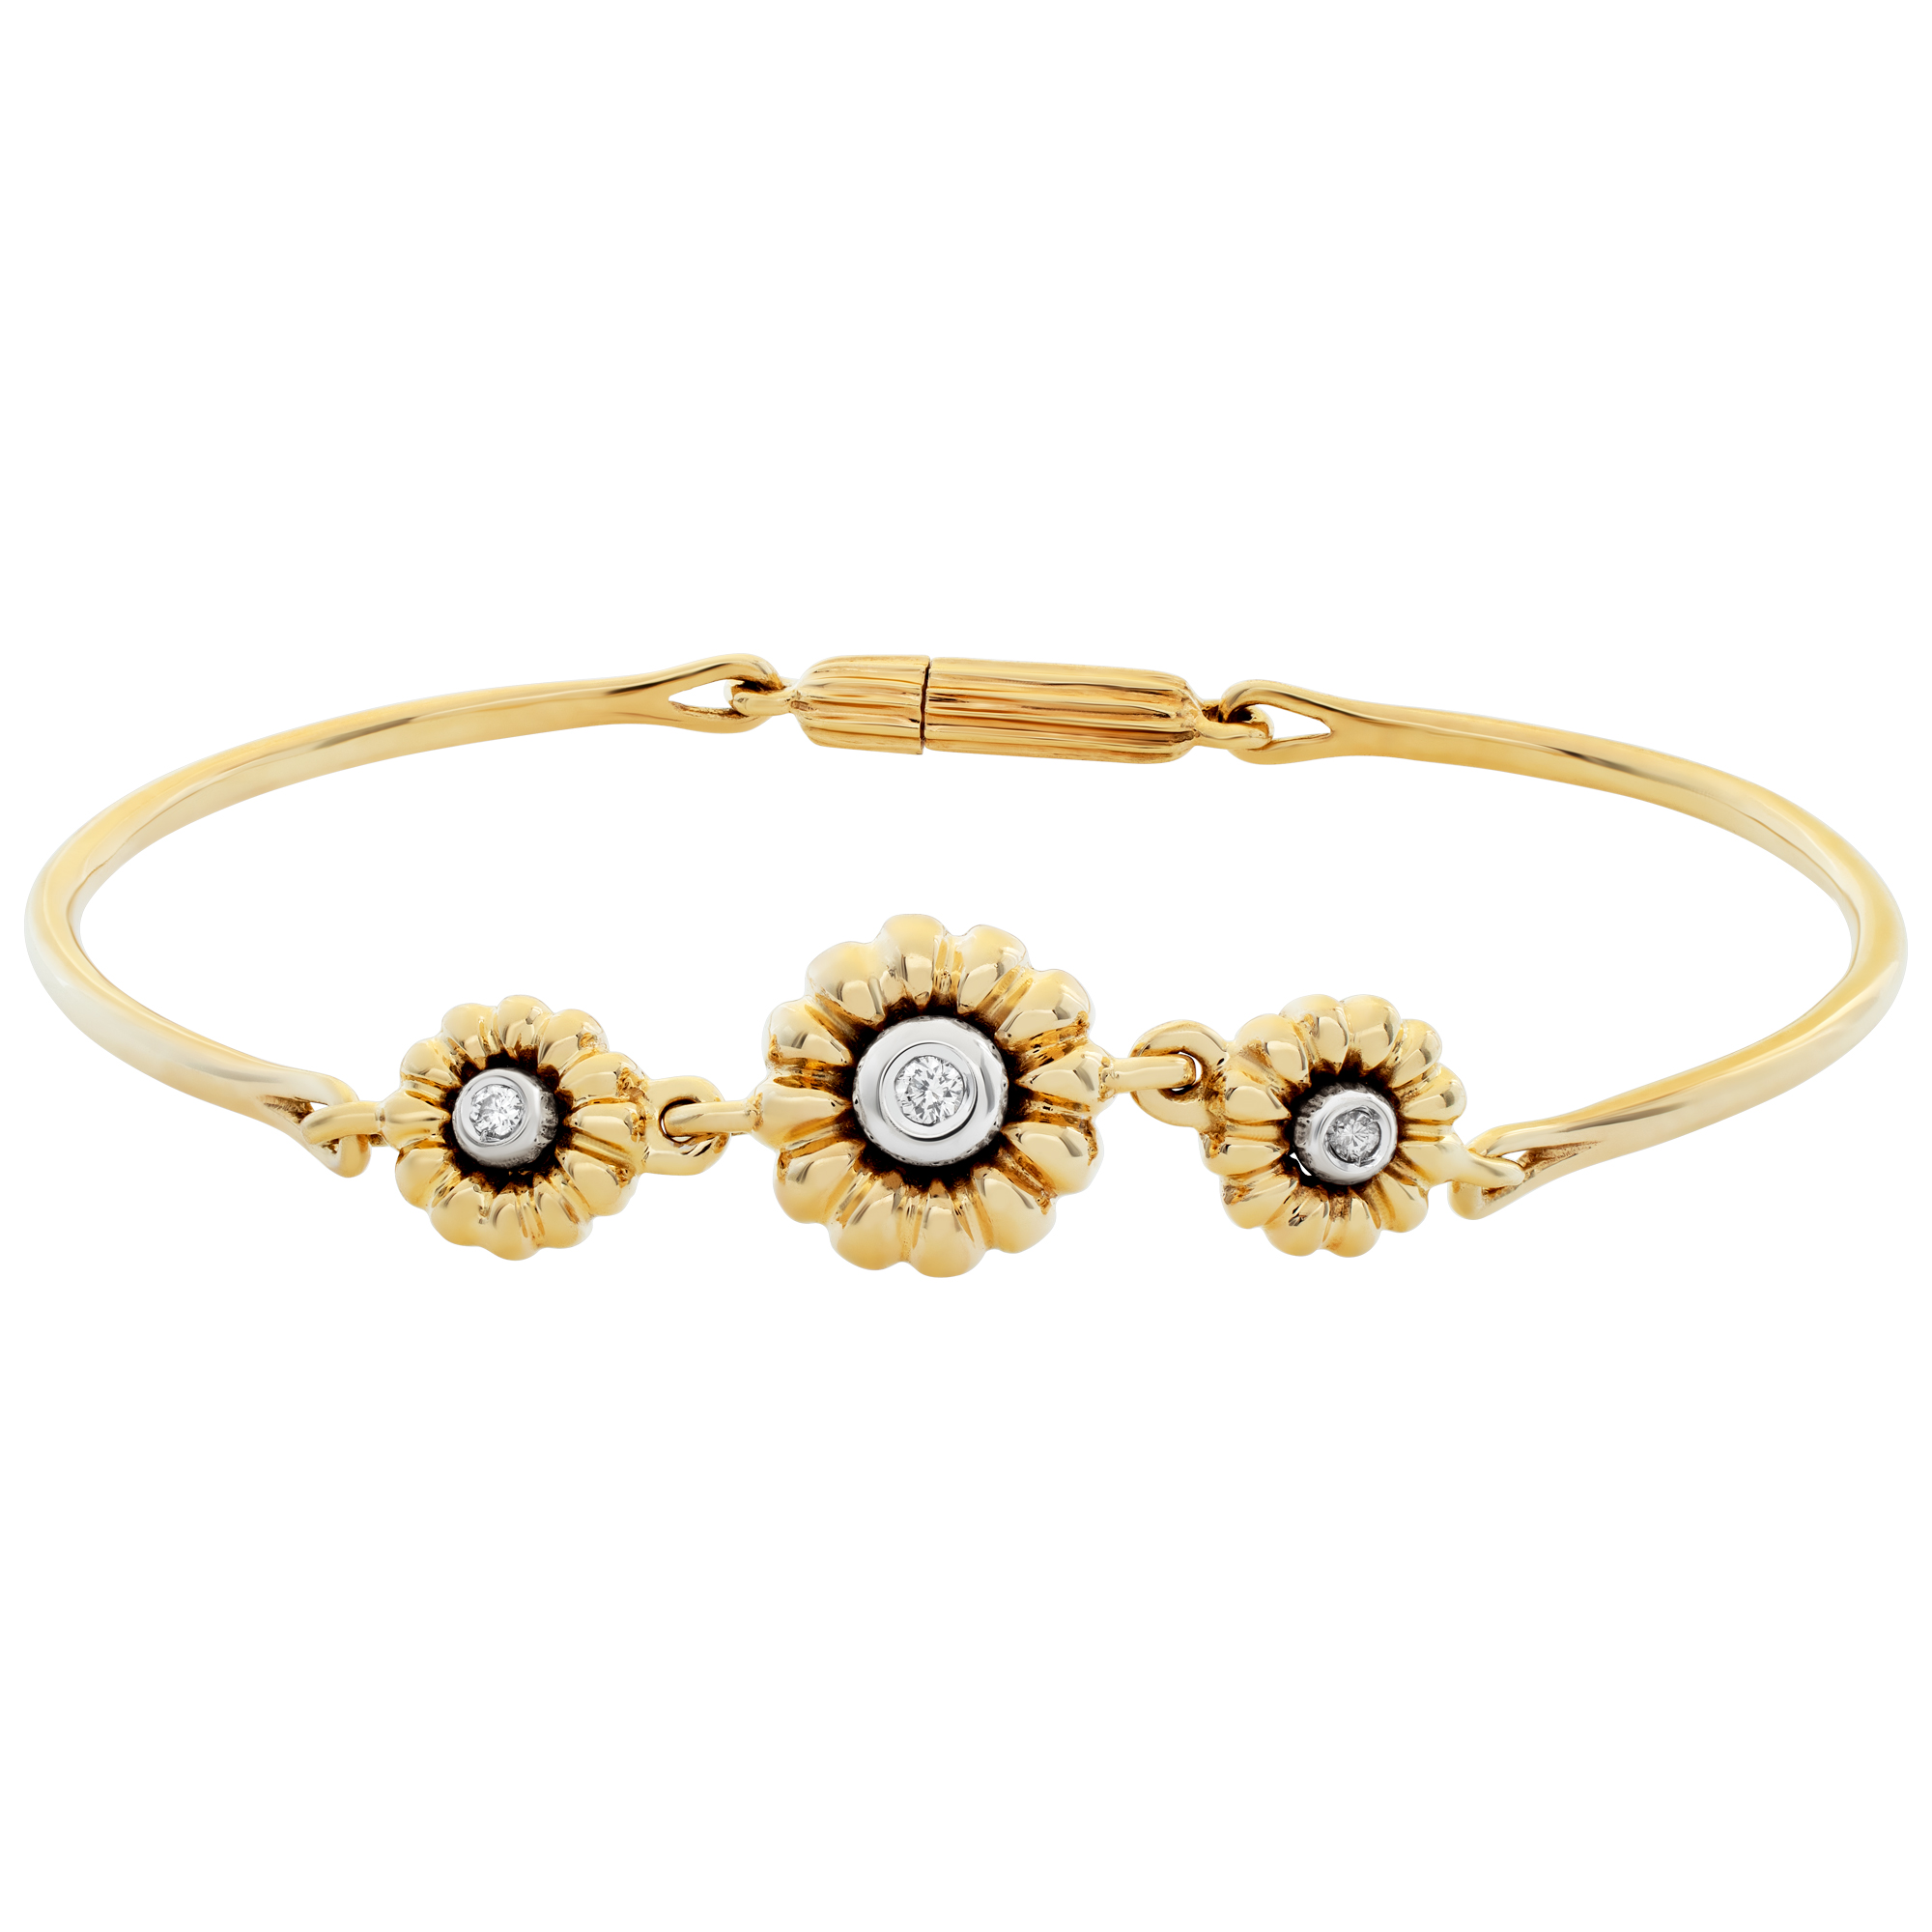 Three flower diamond bracelet in 18k yellow gold.